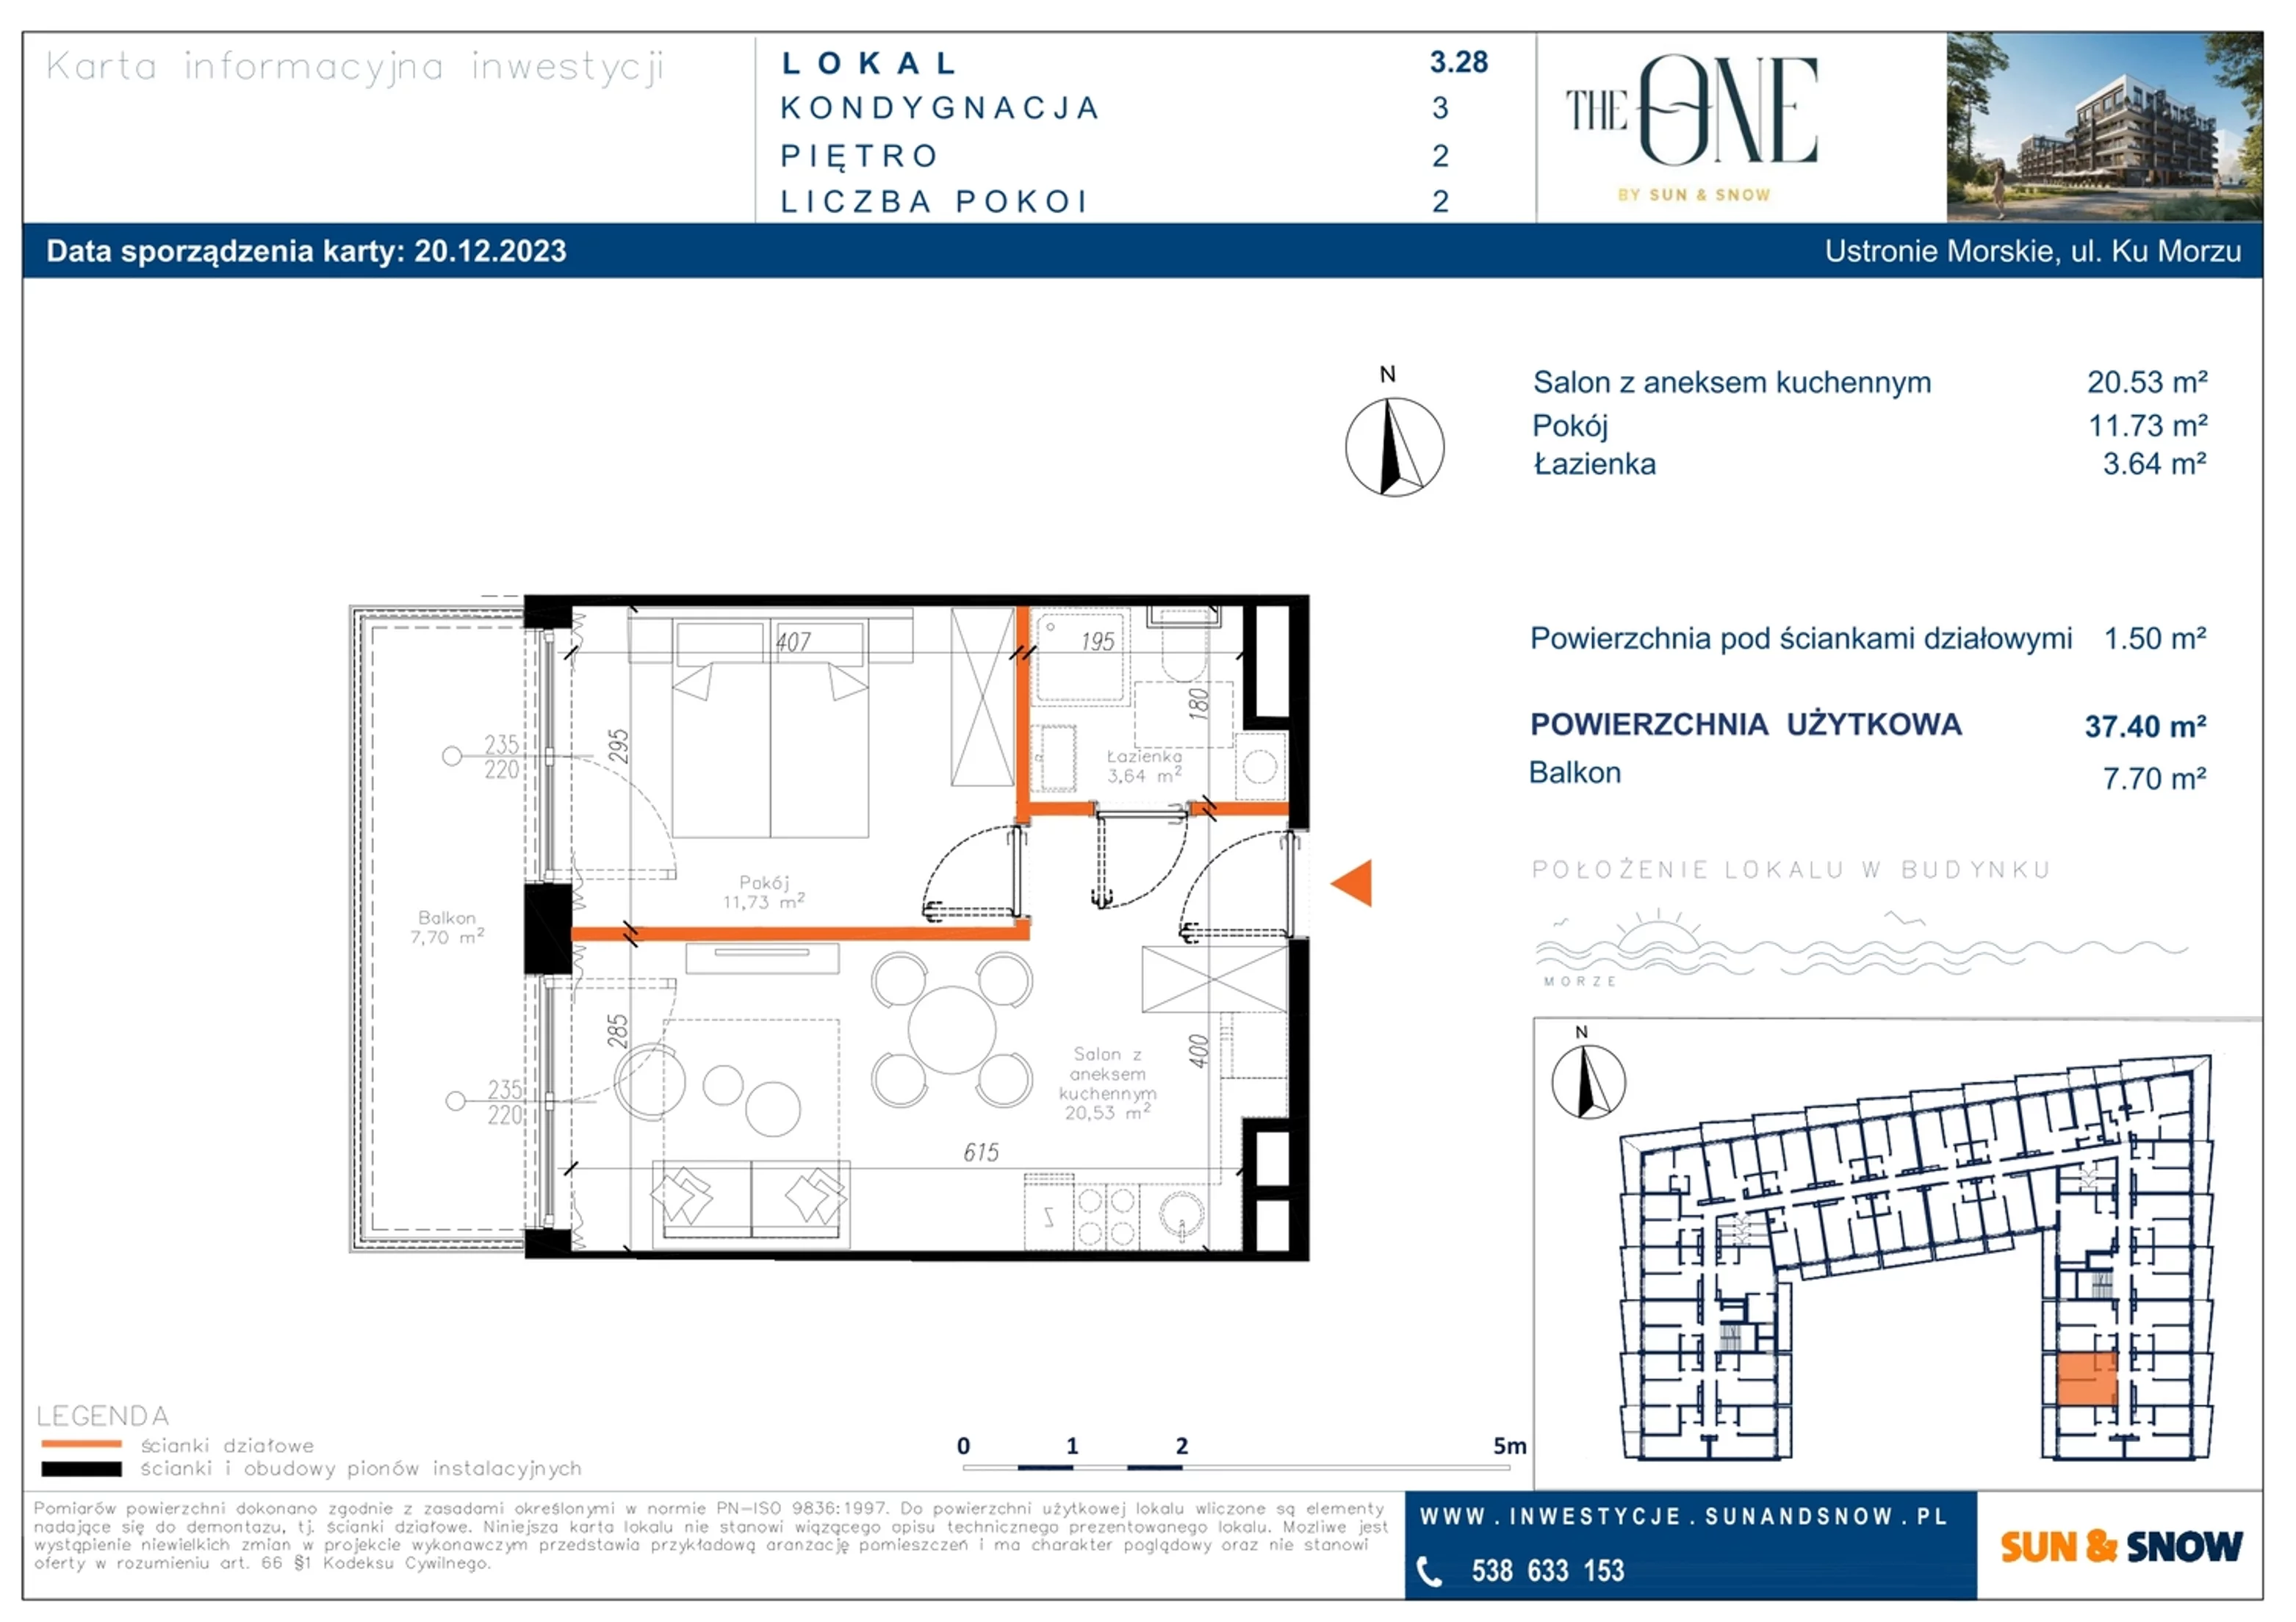 Apartament 37,40 m², piętro 2, oferta nr M/3/28, The One, Ustronie Morskie, ul. Ku Morzu 4